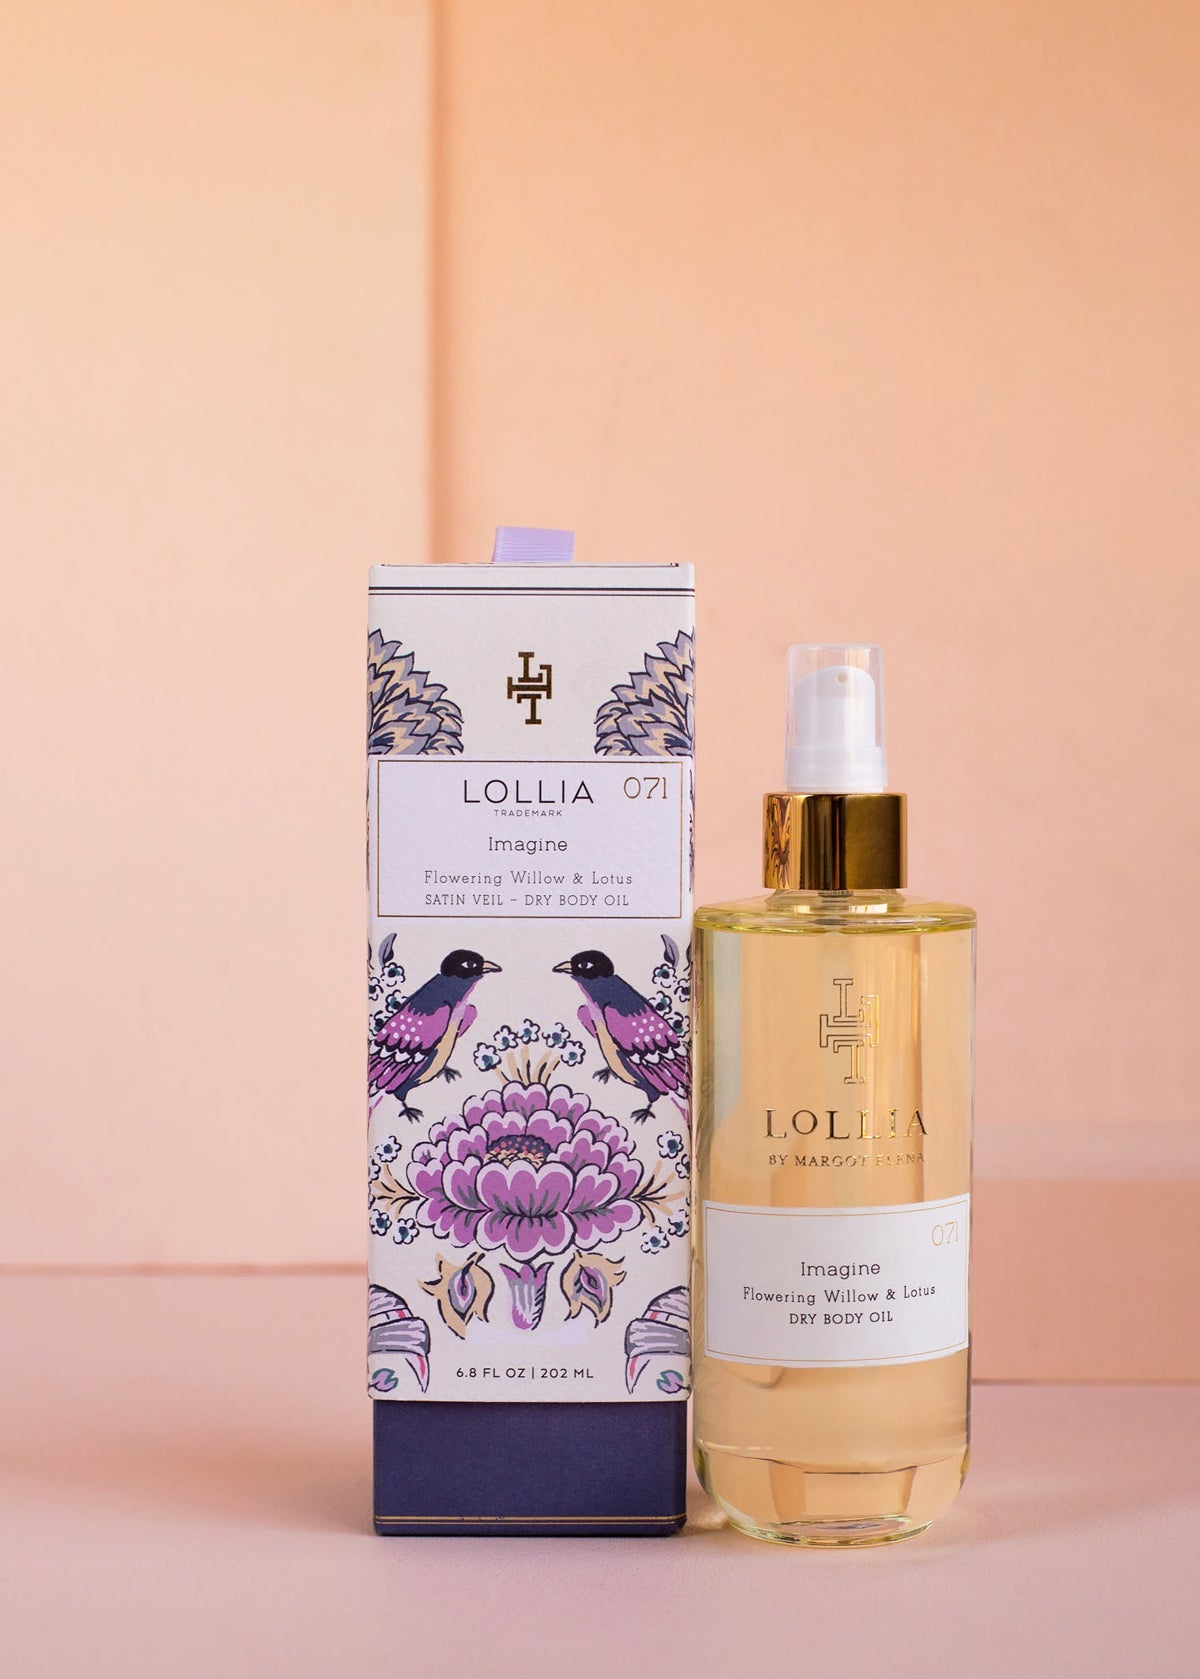 Lollia Dry Body Oil